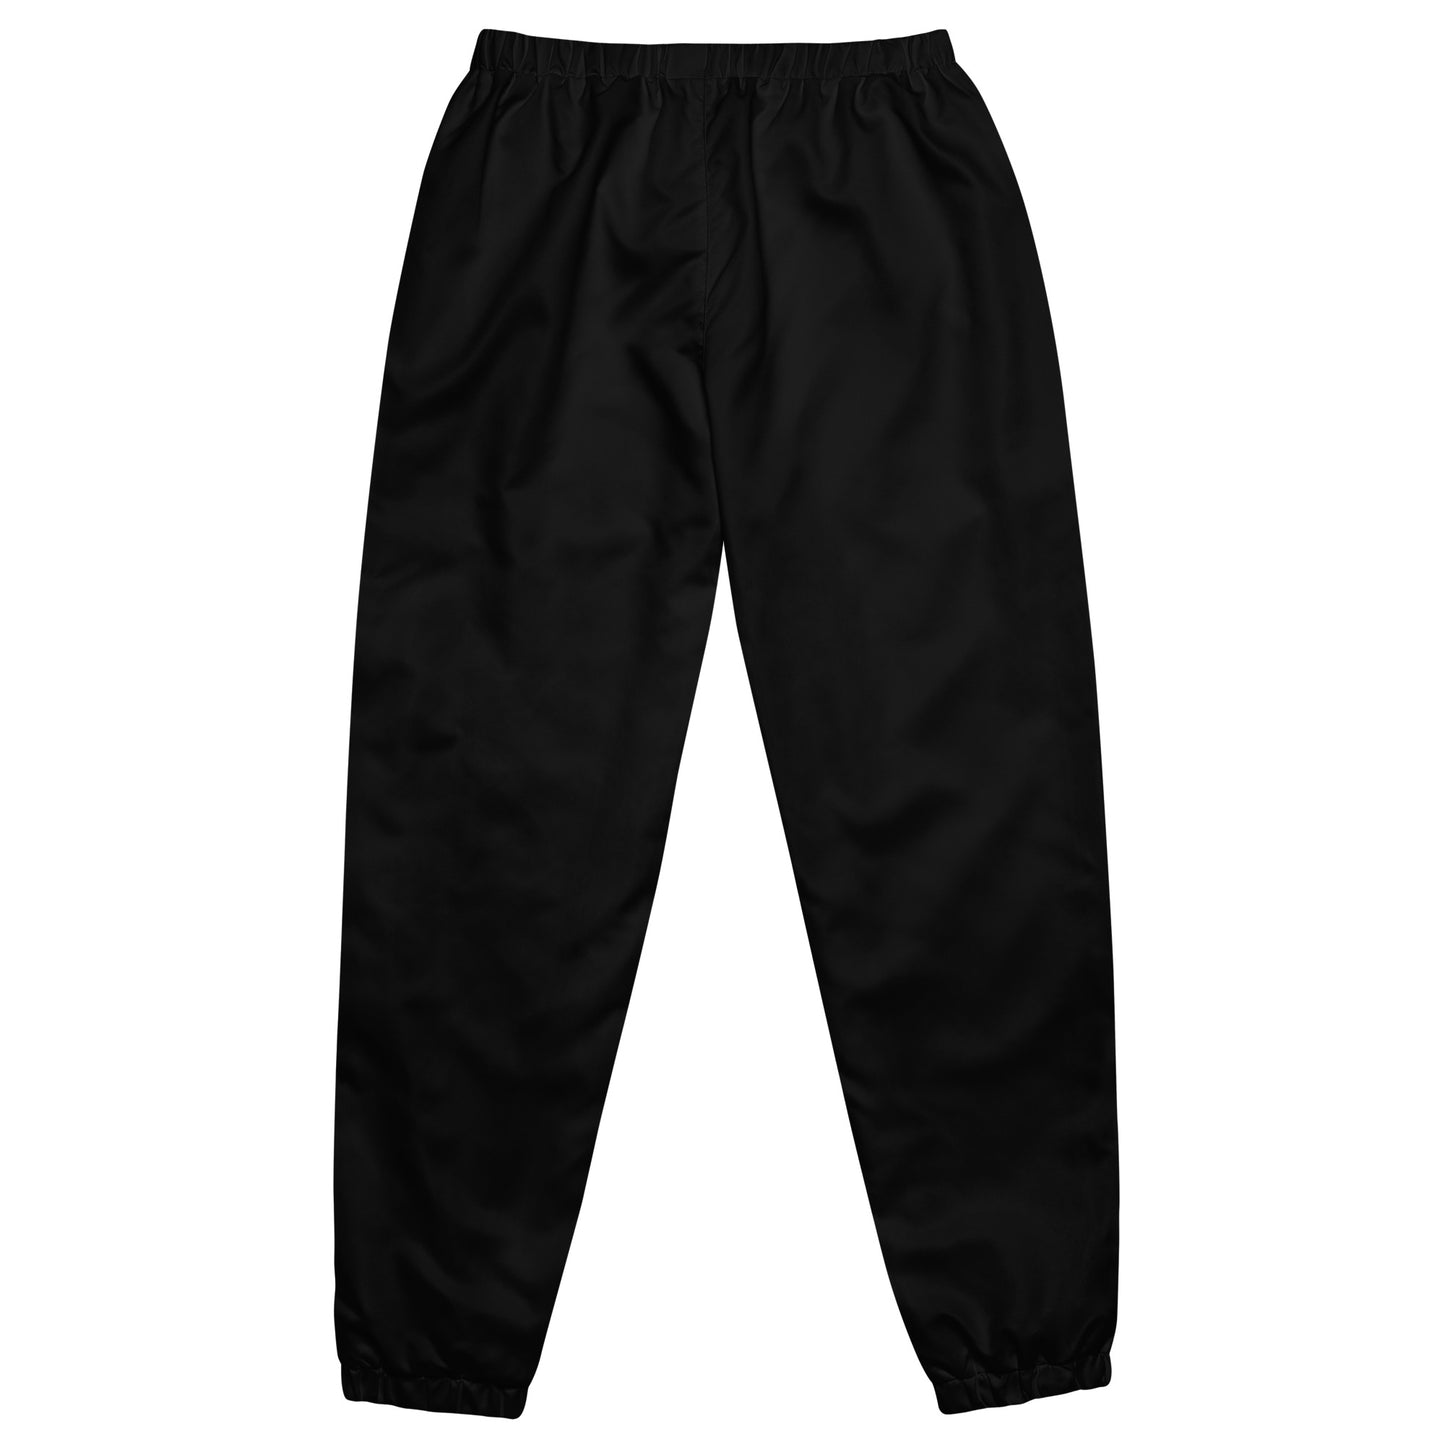 FN UNAMERICAN UNISEX: LAX Track Pants (black/silver)